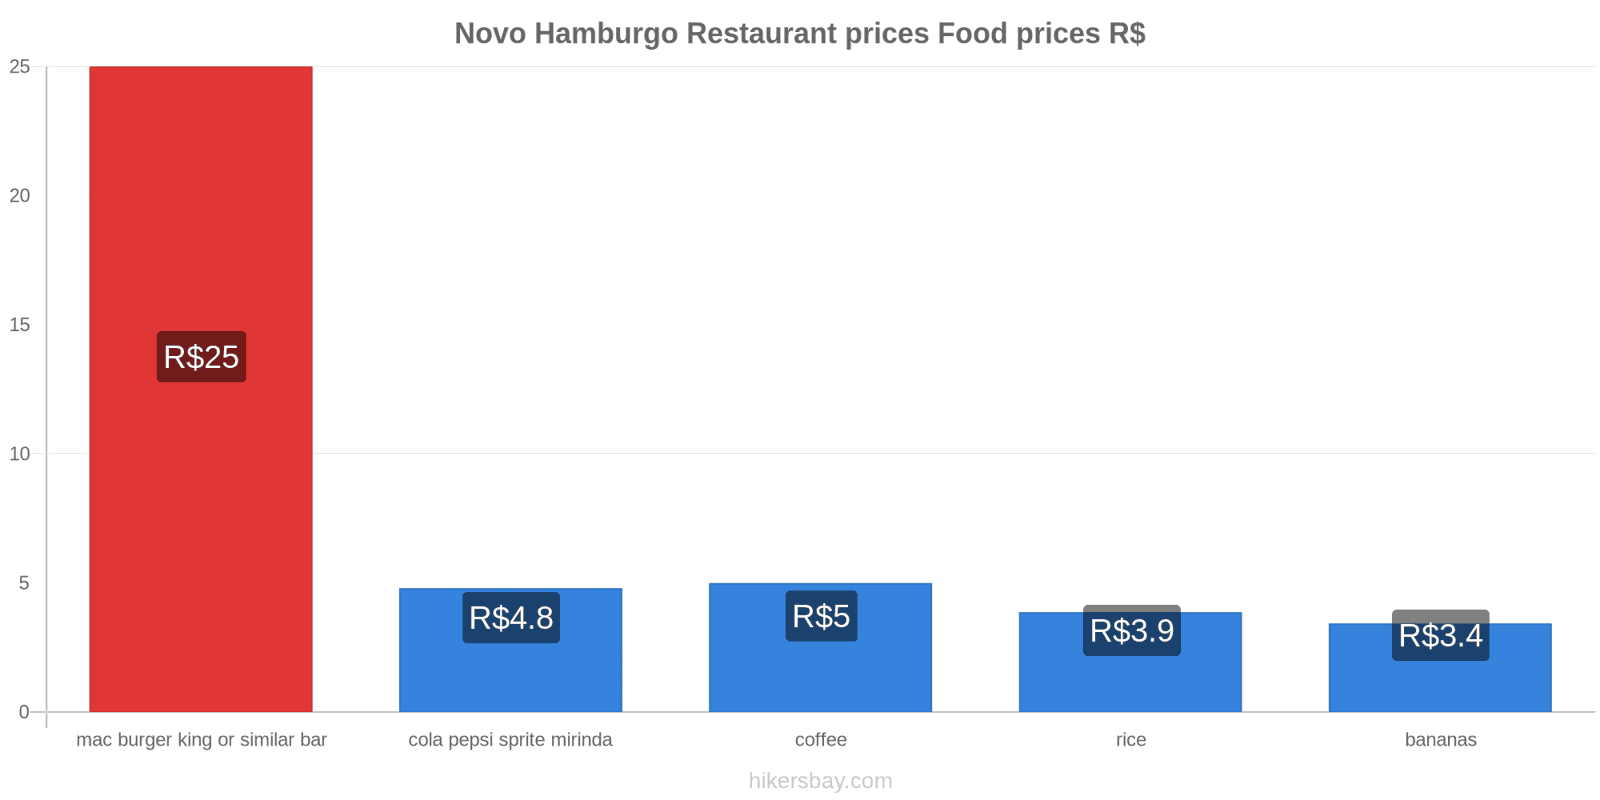 Novo Hamburgo price changes hikersbay.com